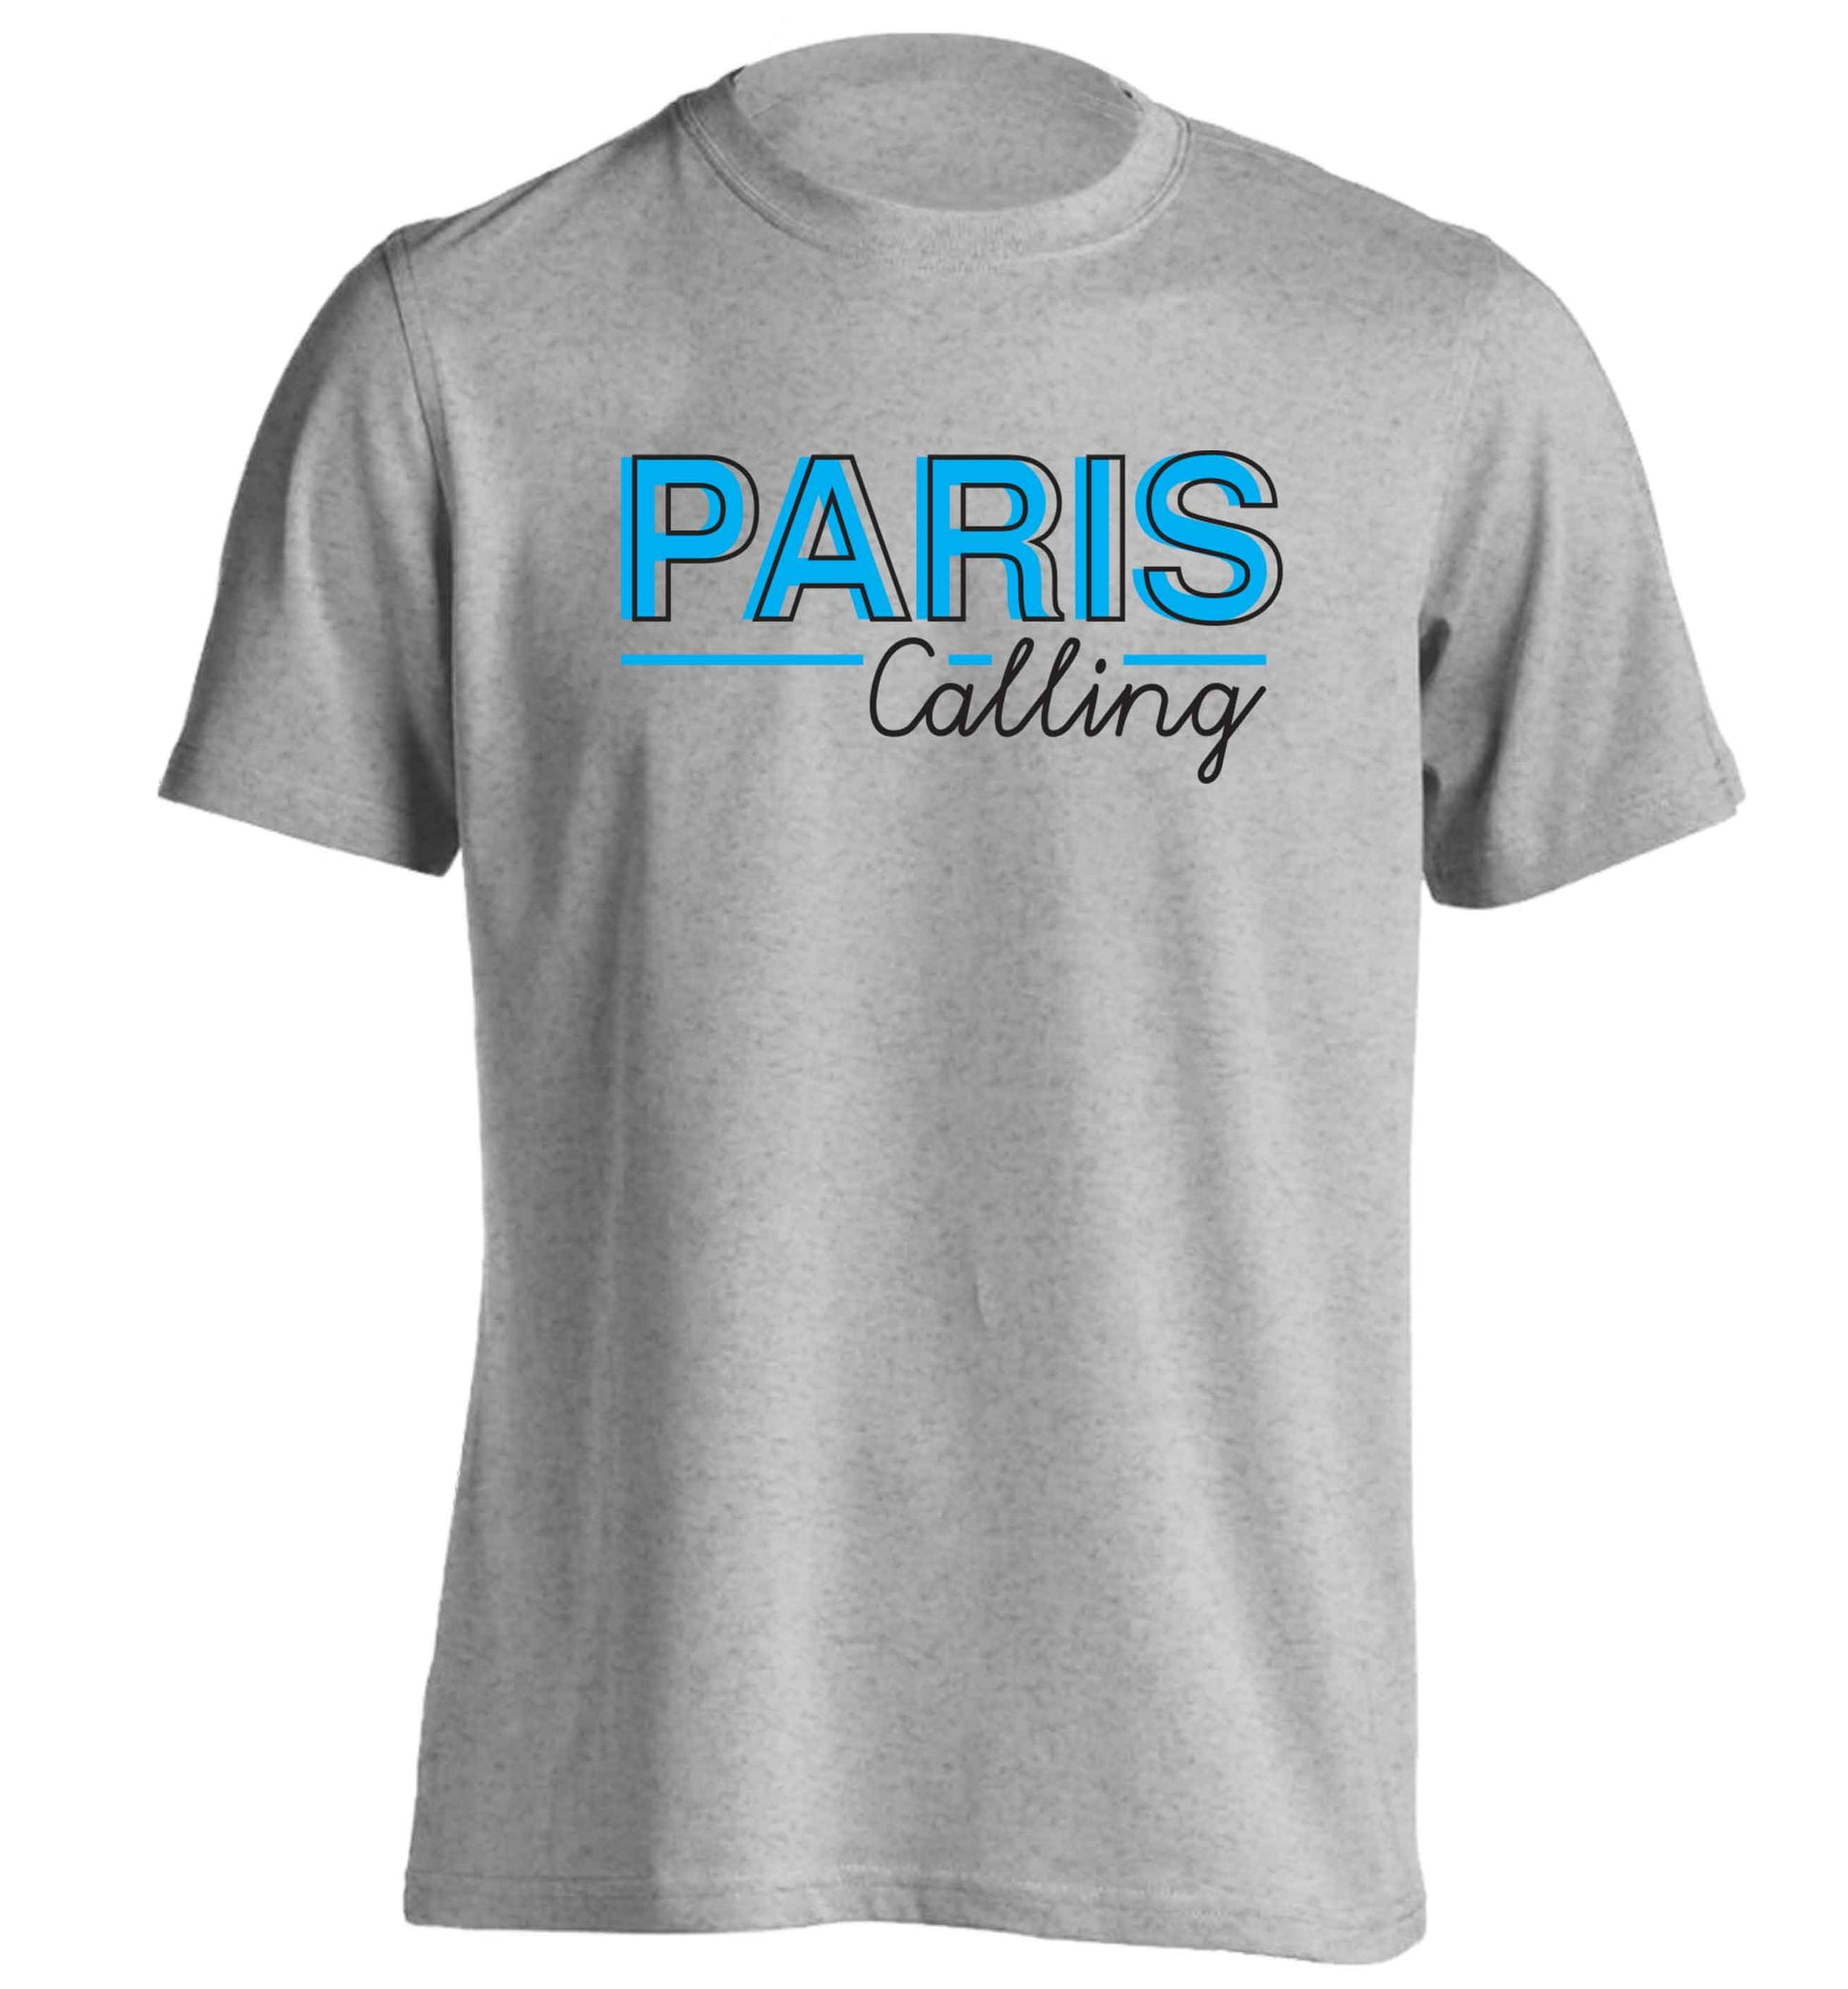 Paris calling adults unisex grey Tshirt 2XL